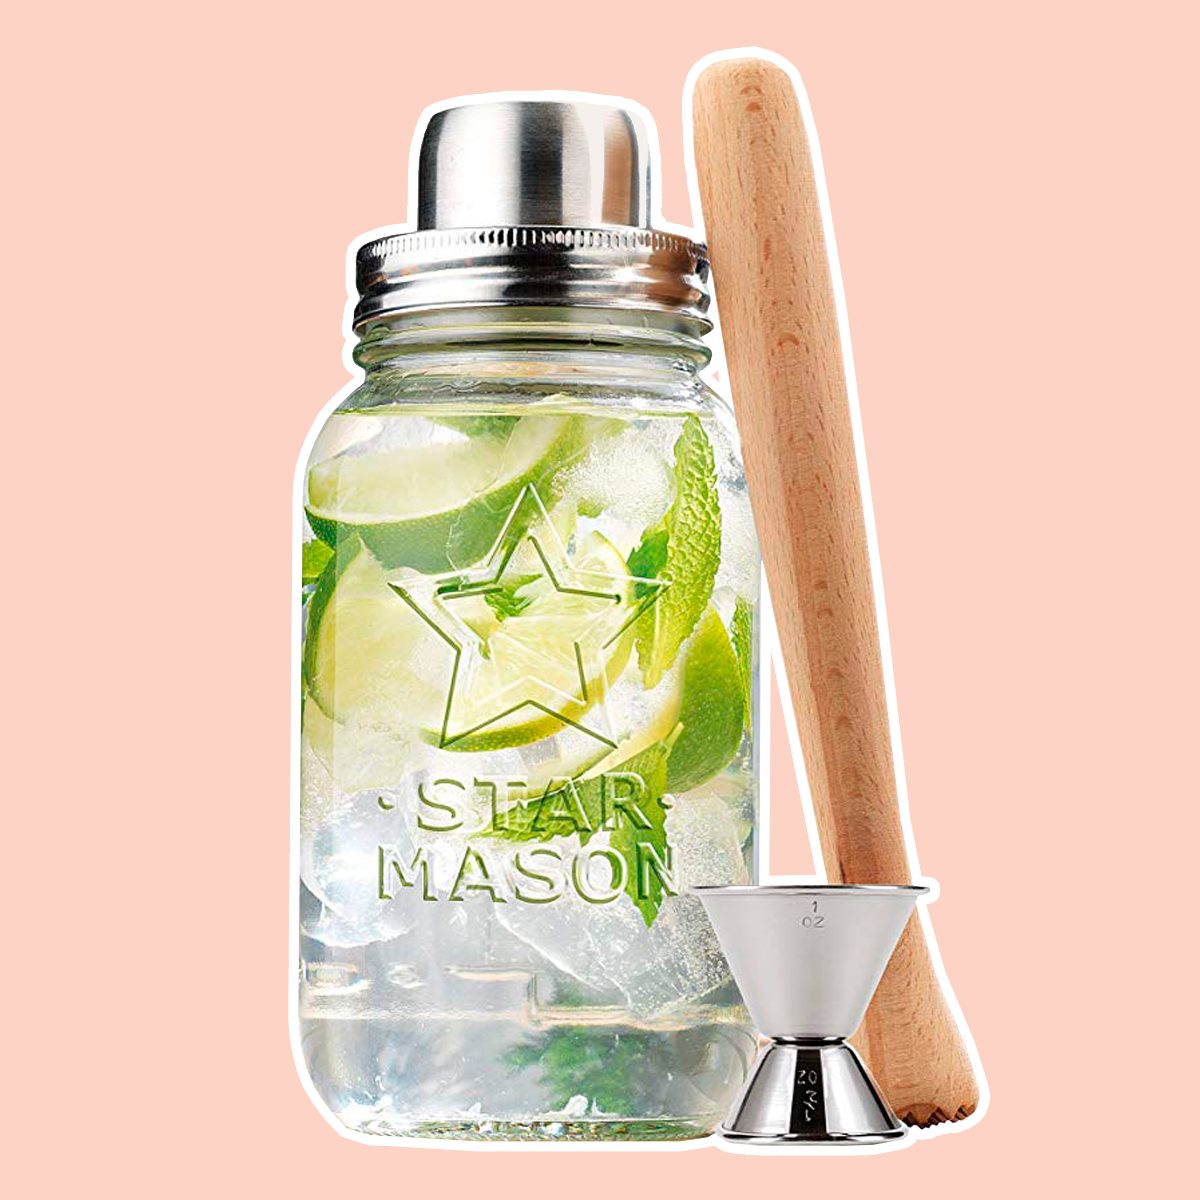 https://www.tasteofhome.com/wp-content/uploads/2019/10/Mason-Jar-and-Stainless-Steel-Cocktail-Shaker-Set.jpg?fit=700%2C700